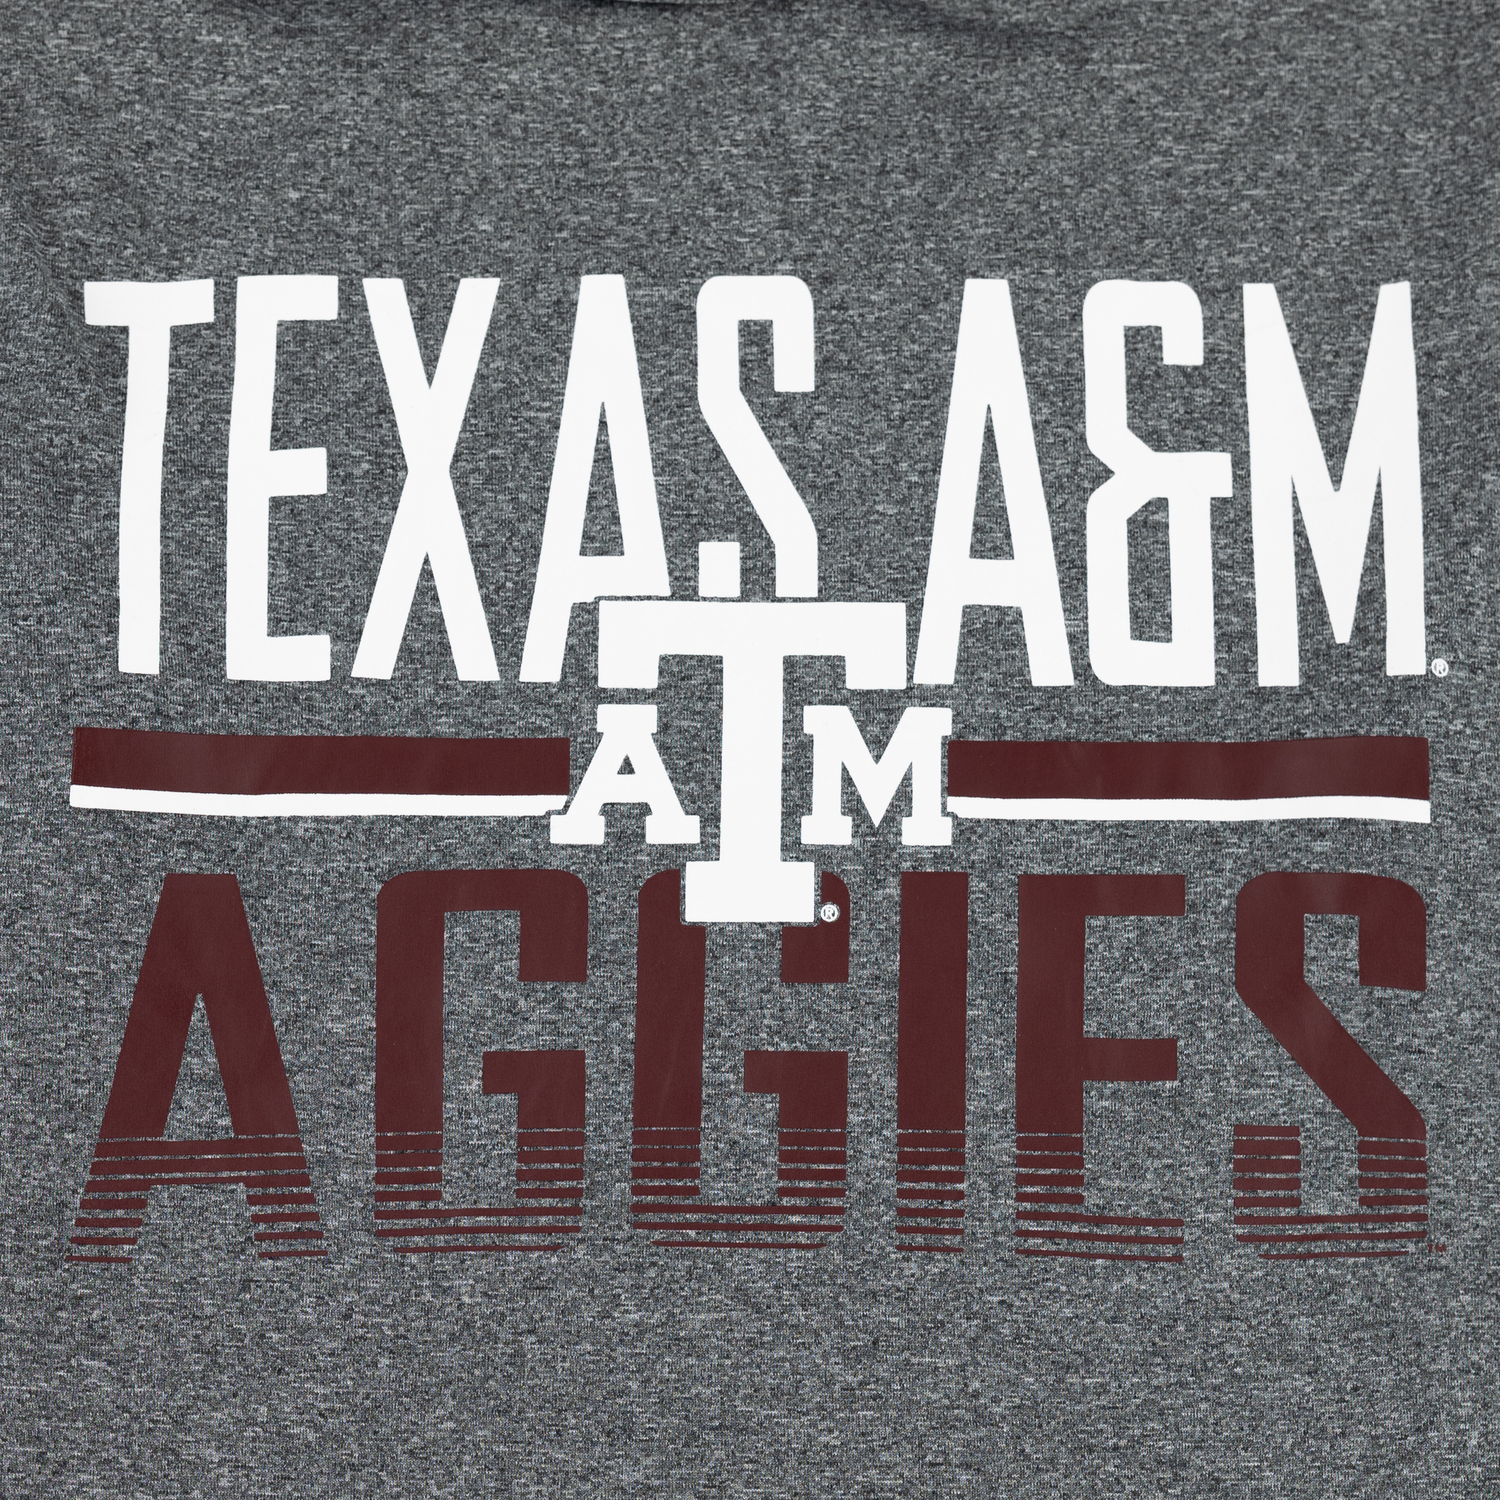 Texas A&M Aggies Heathered Impact Hood Long Sleeve